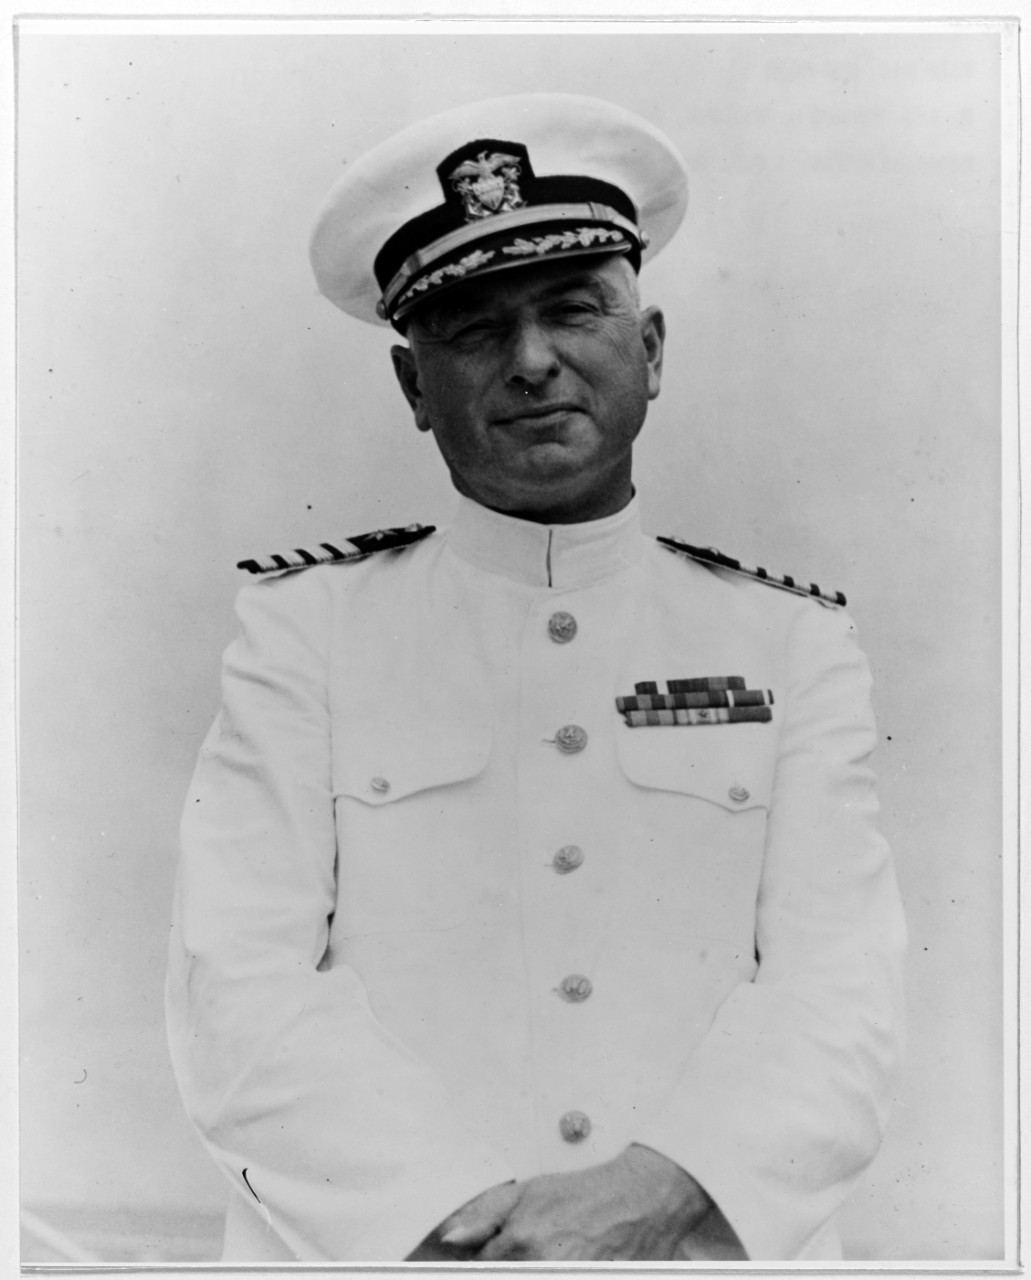 Captain Edward C. Kalbfus, USN